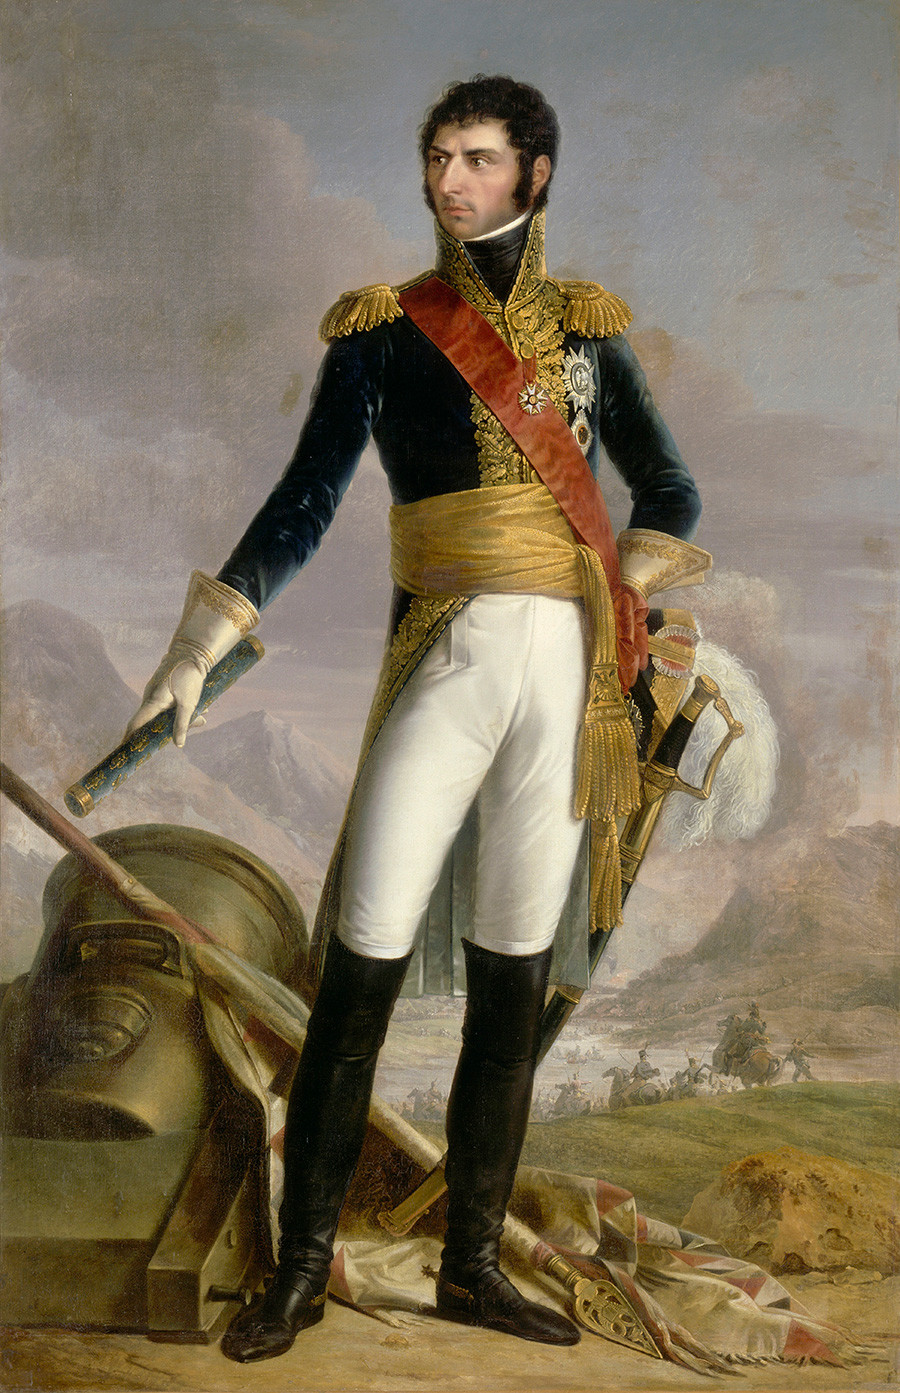 Жан Батист Бернадот, Карл XIV Јуан Шведски и Карл III Јохан Норвешки, маршал француски, 1818. према слици Франсоа Кинсона.